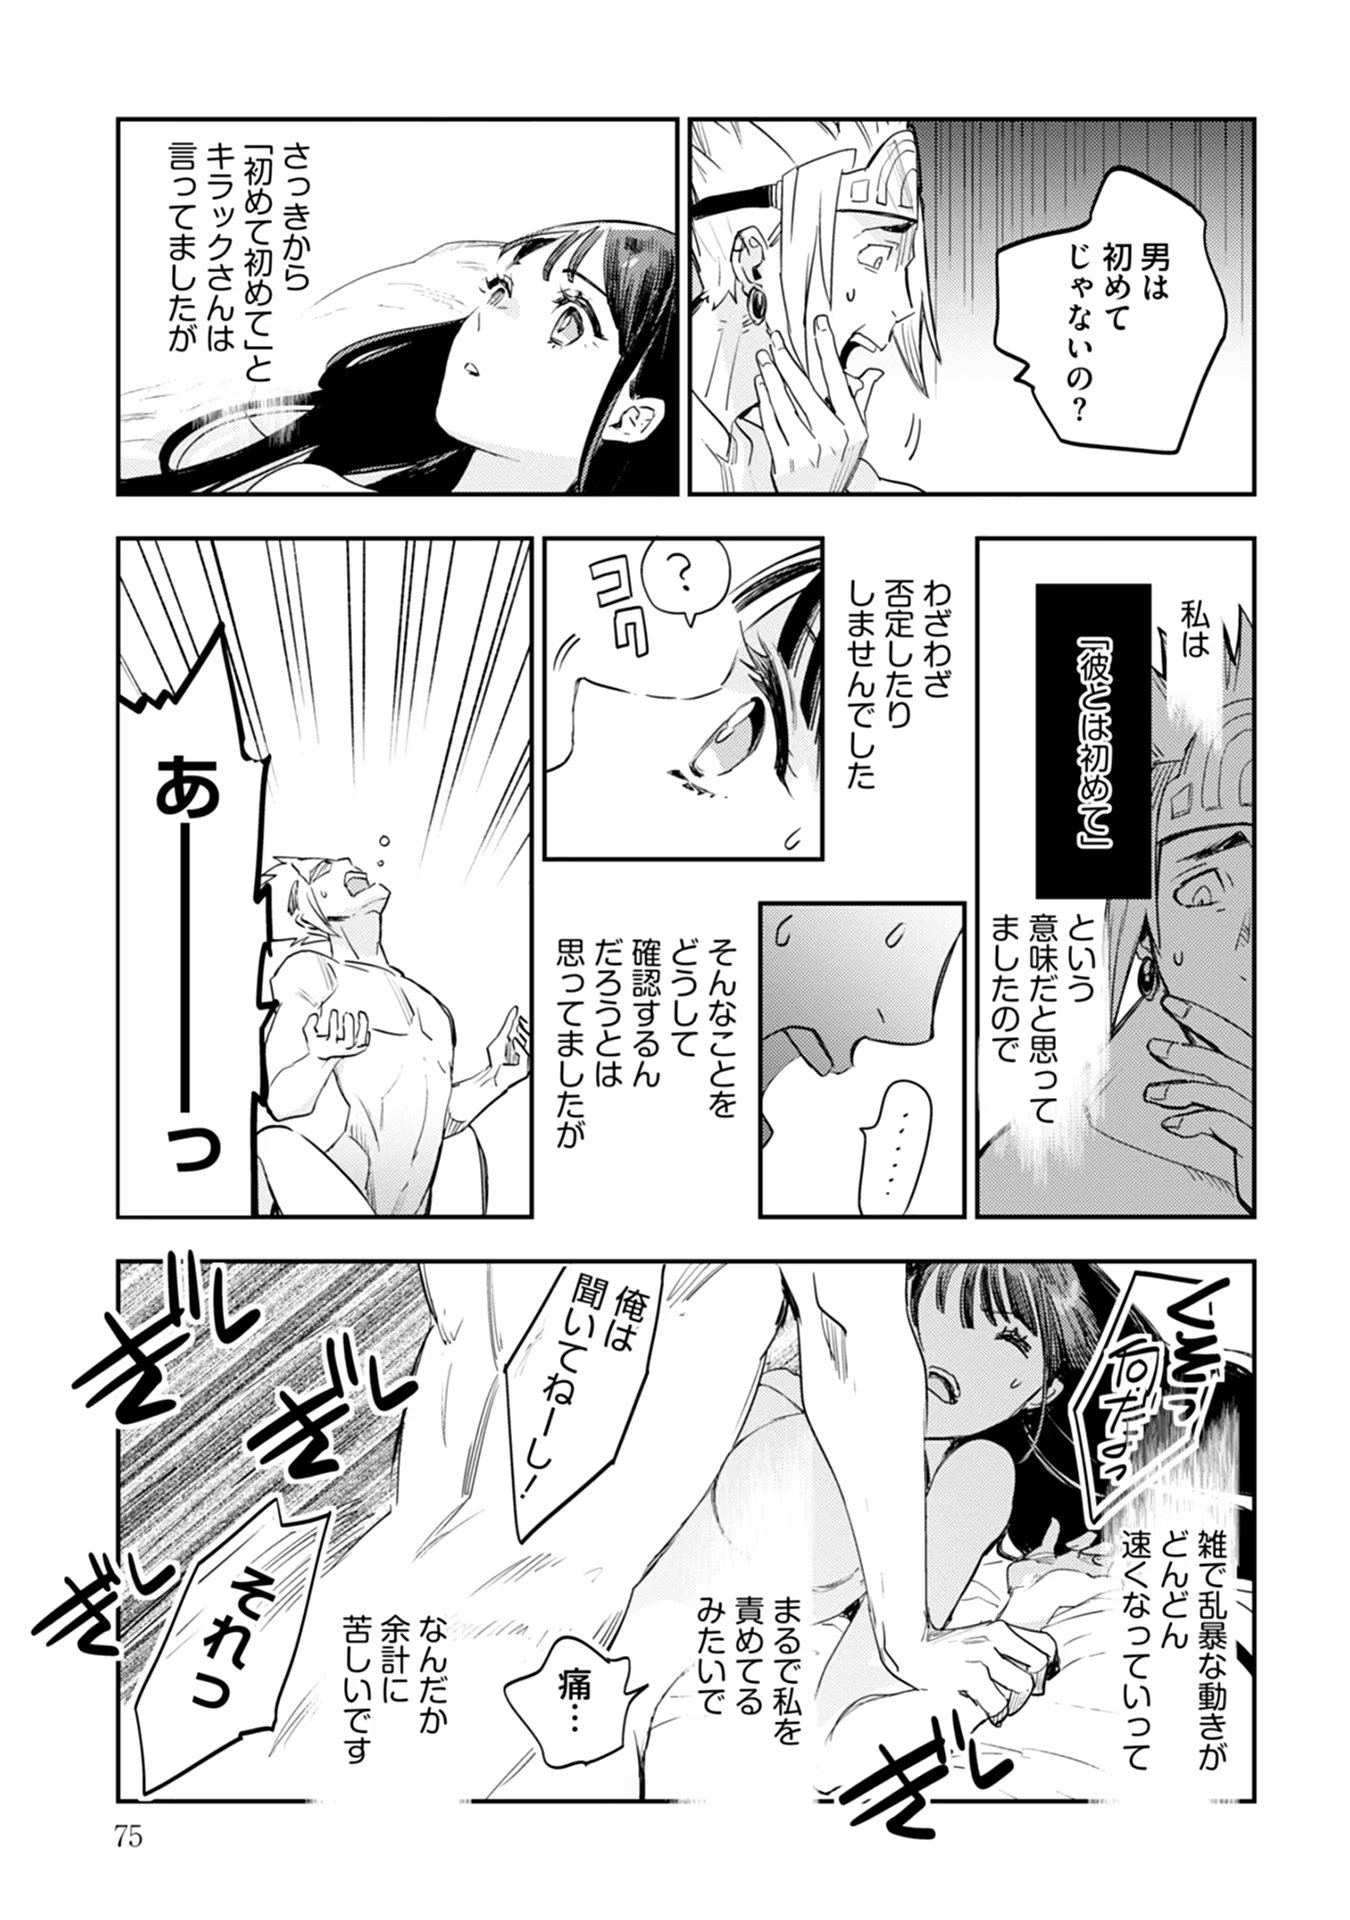 JK Haru Wa Isekai De Shoufu Ni Natta - Chapter 39 - Page 2